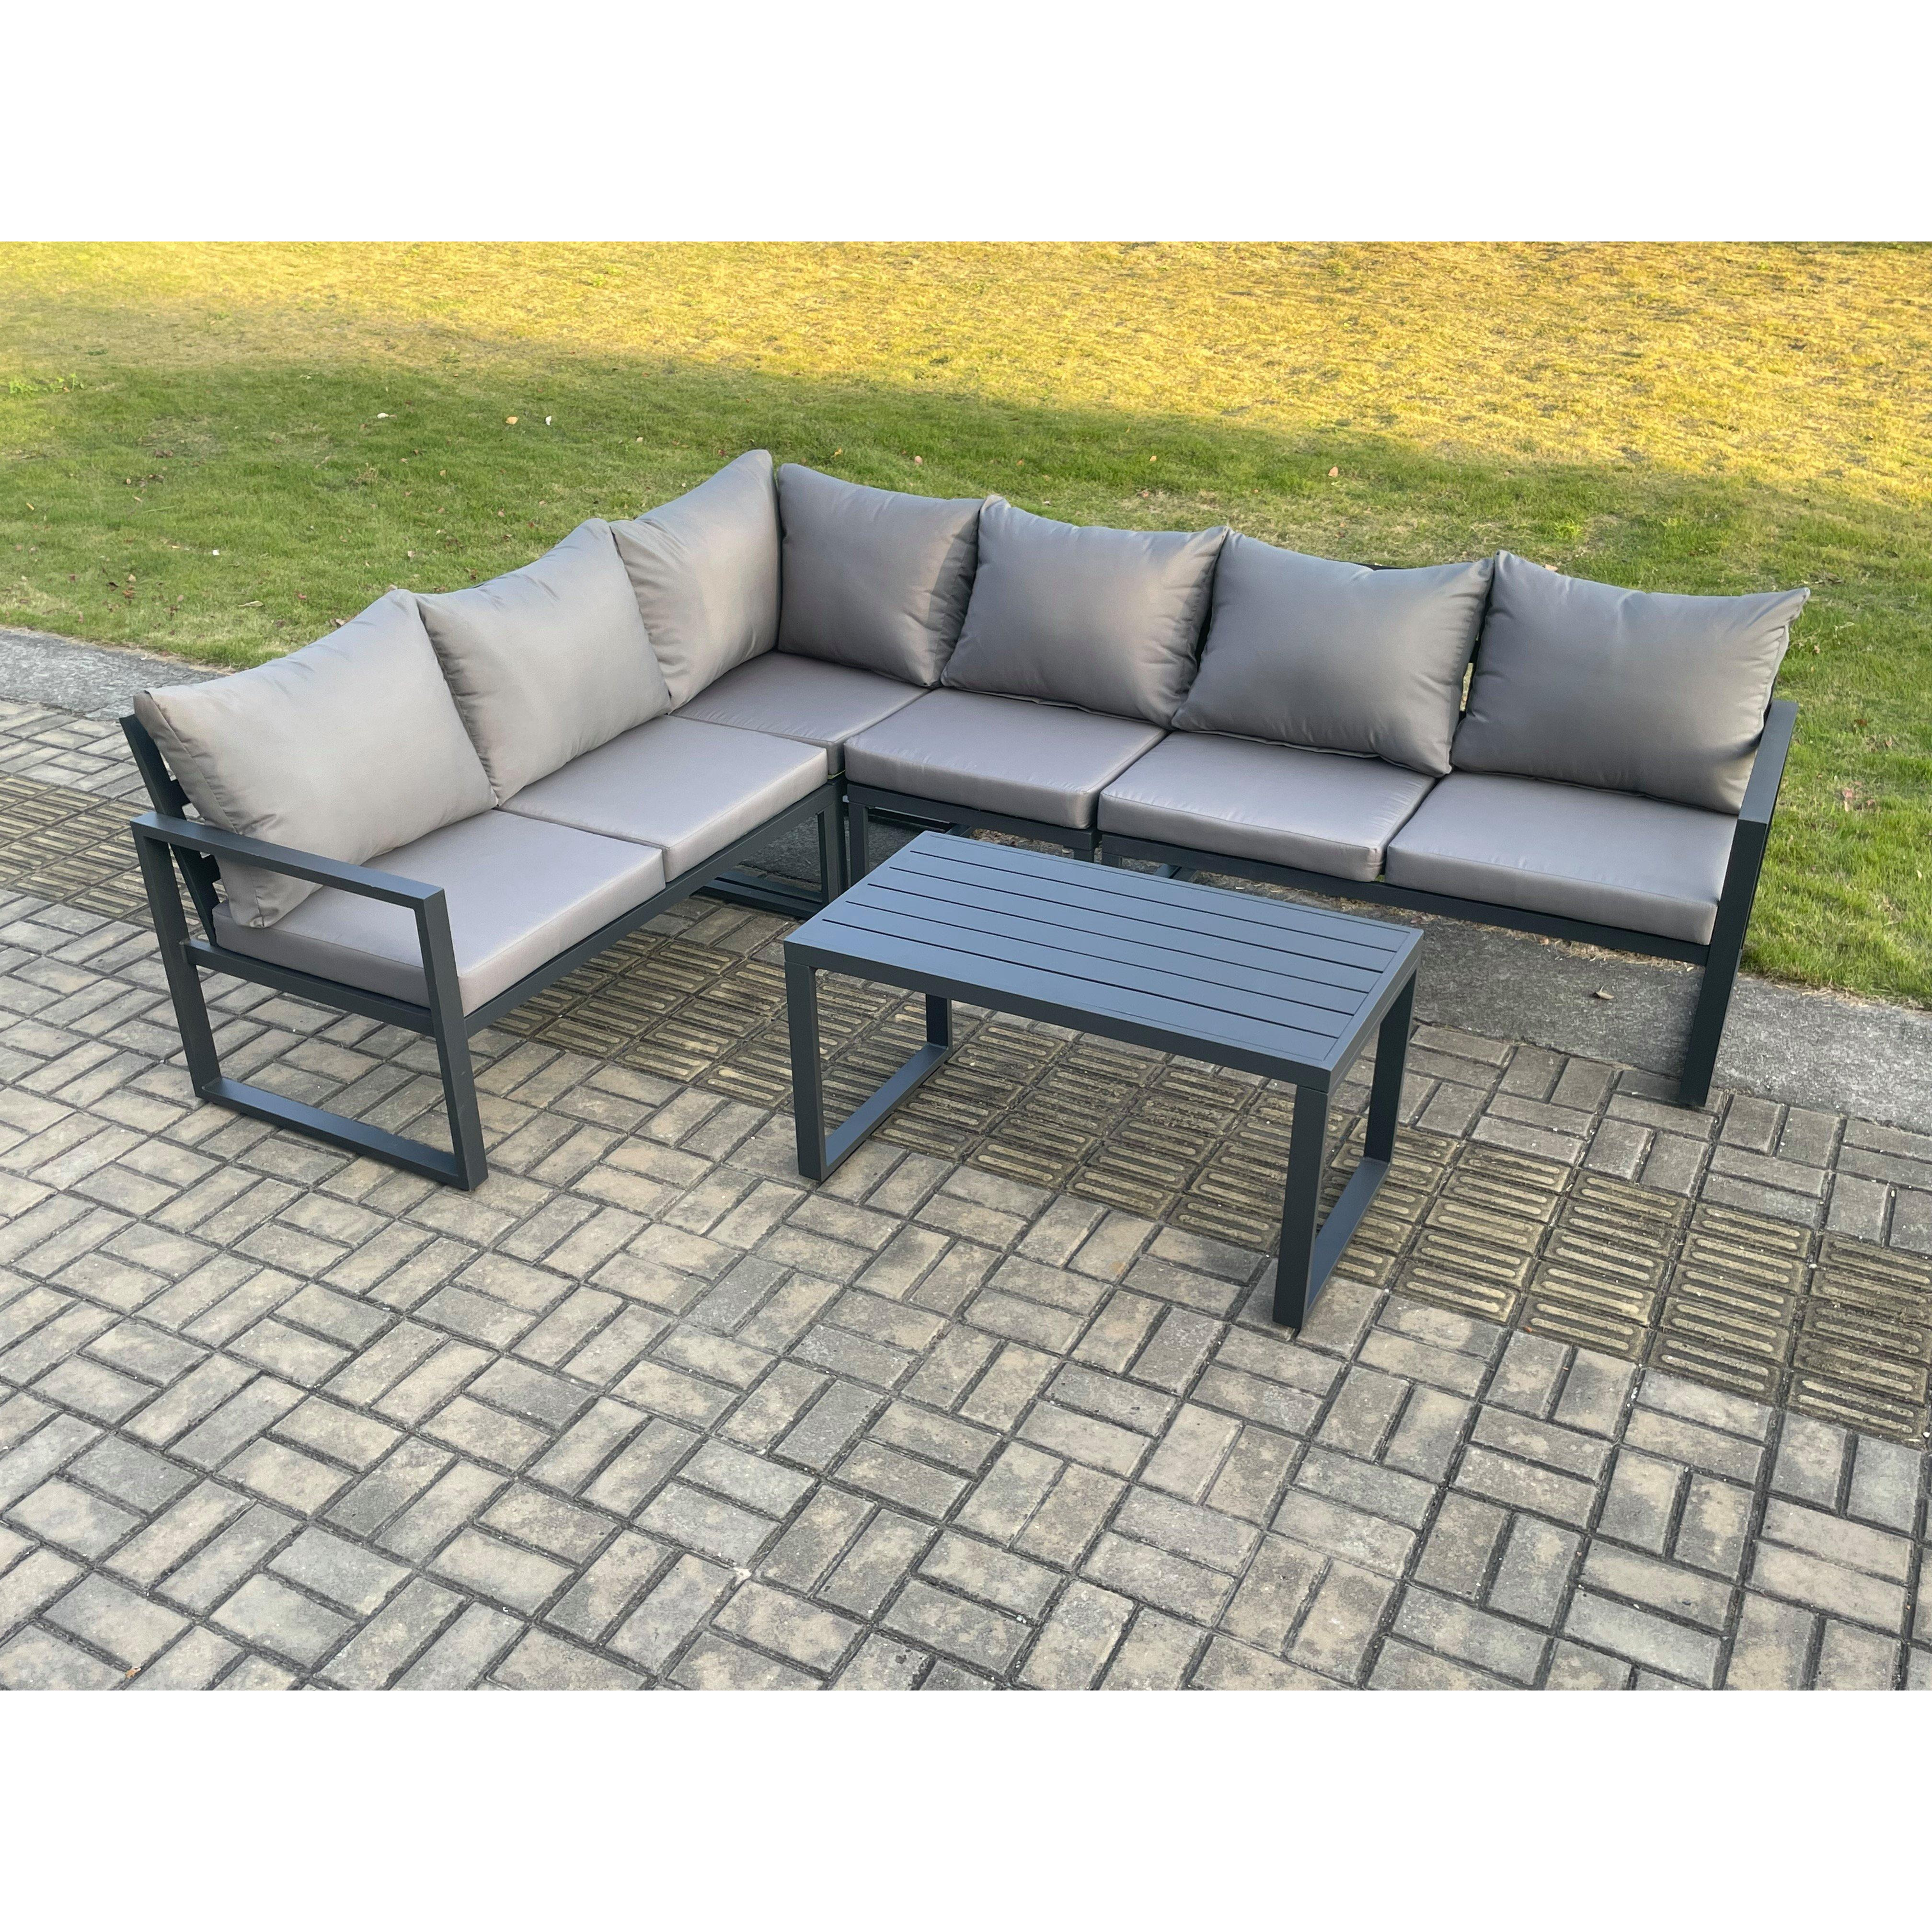 Aluminium Garden Furniture Set Outdoor Indoor Lounge Corner Sofa Oblong Coffee Table Sets Dark Grey 6 Seater - image 1